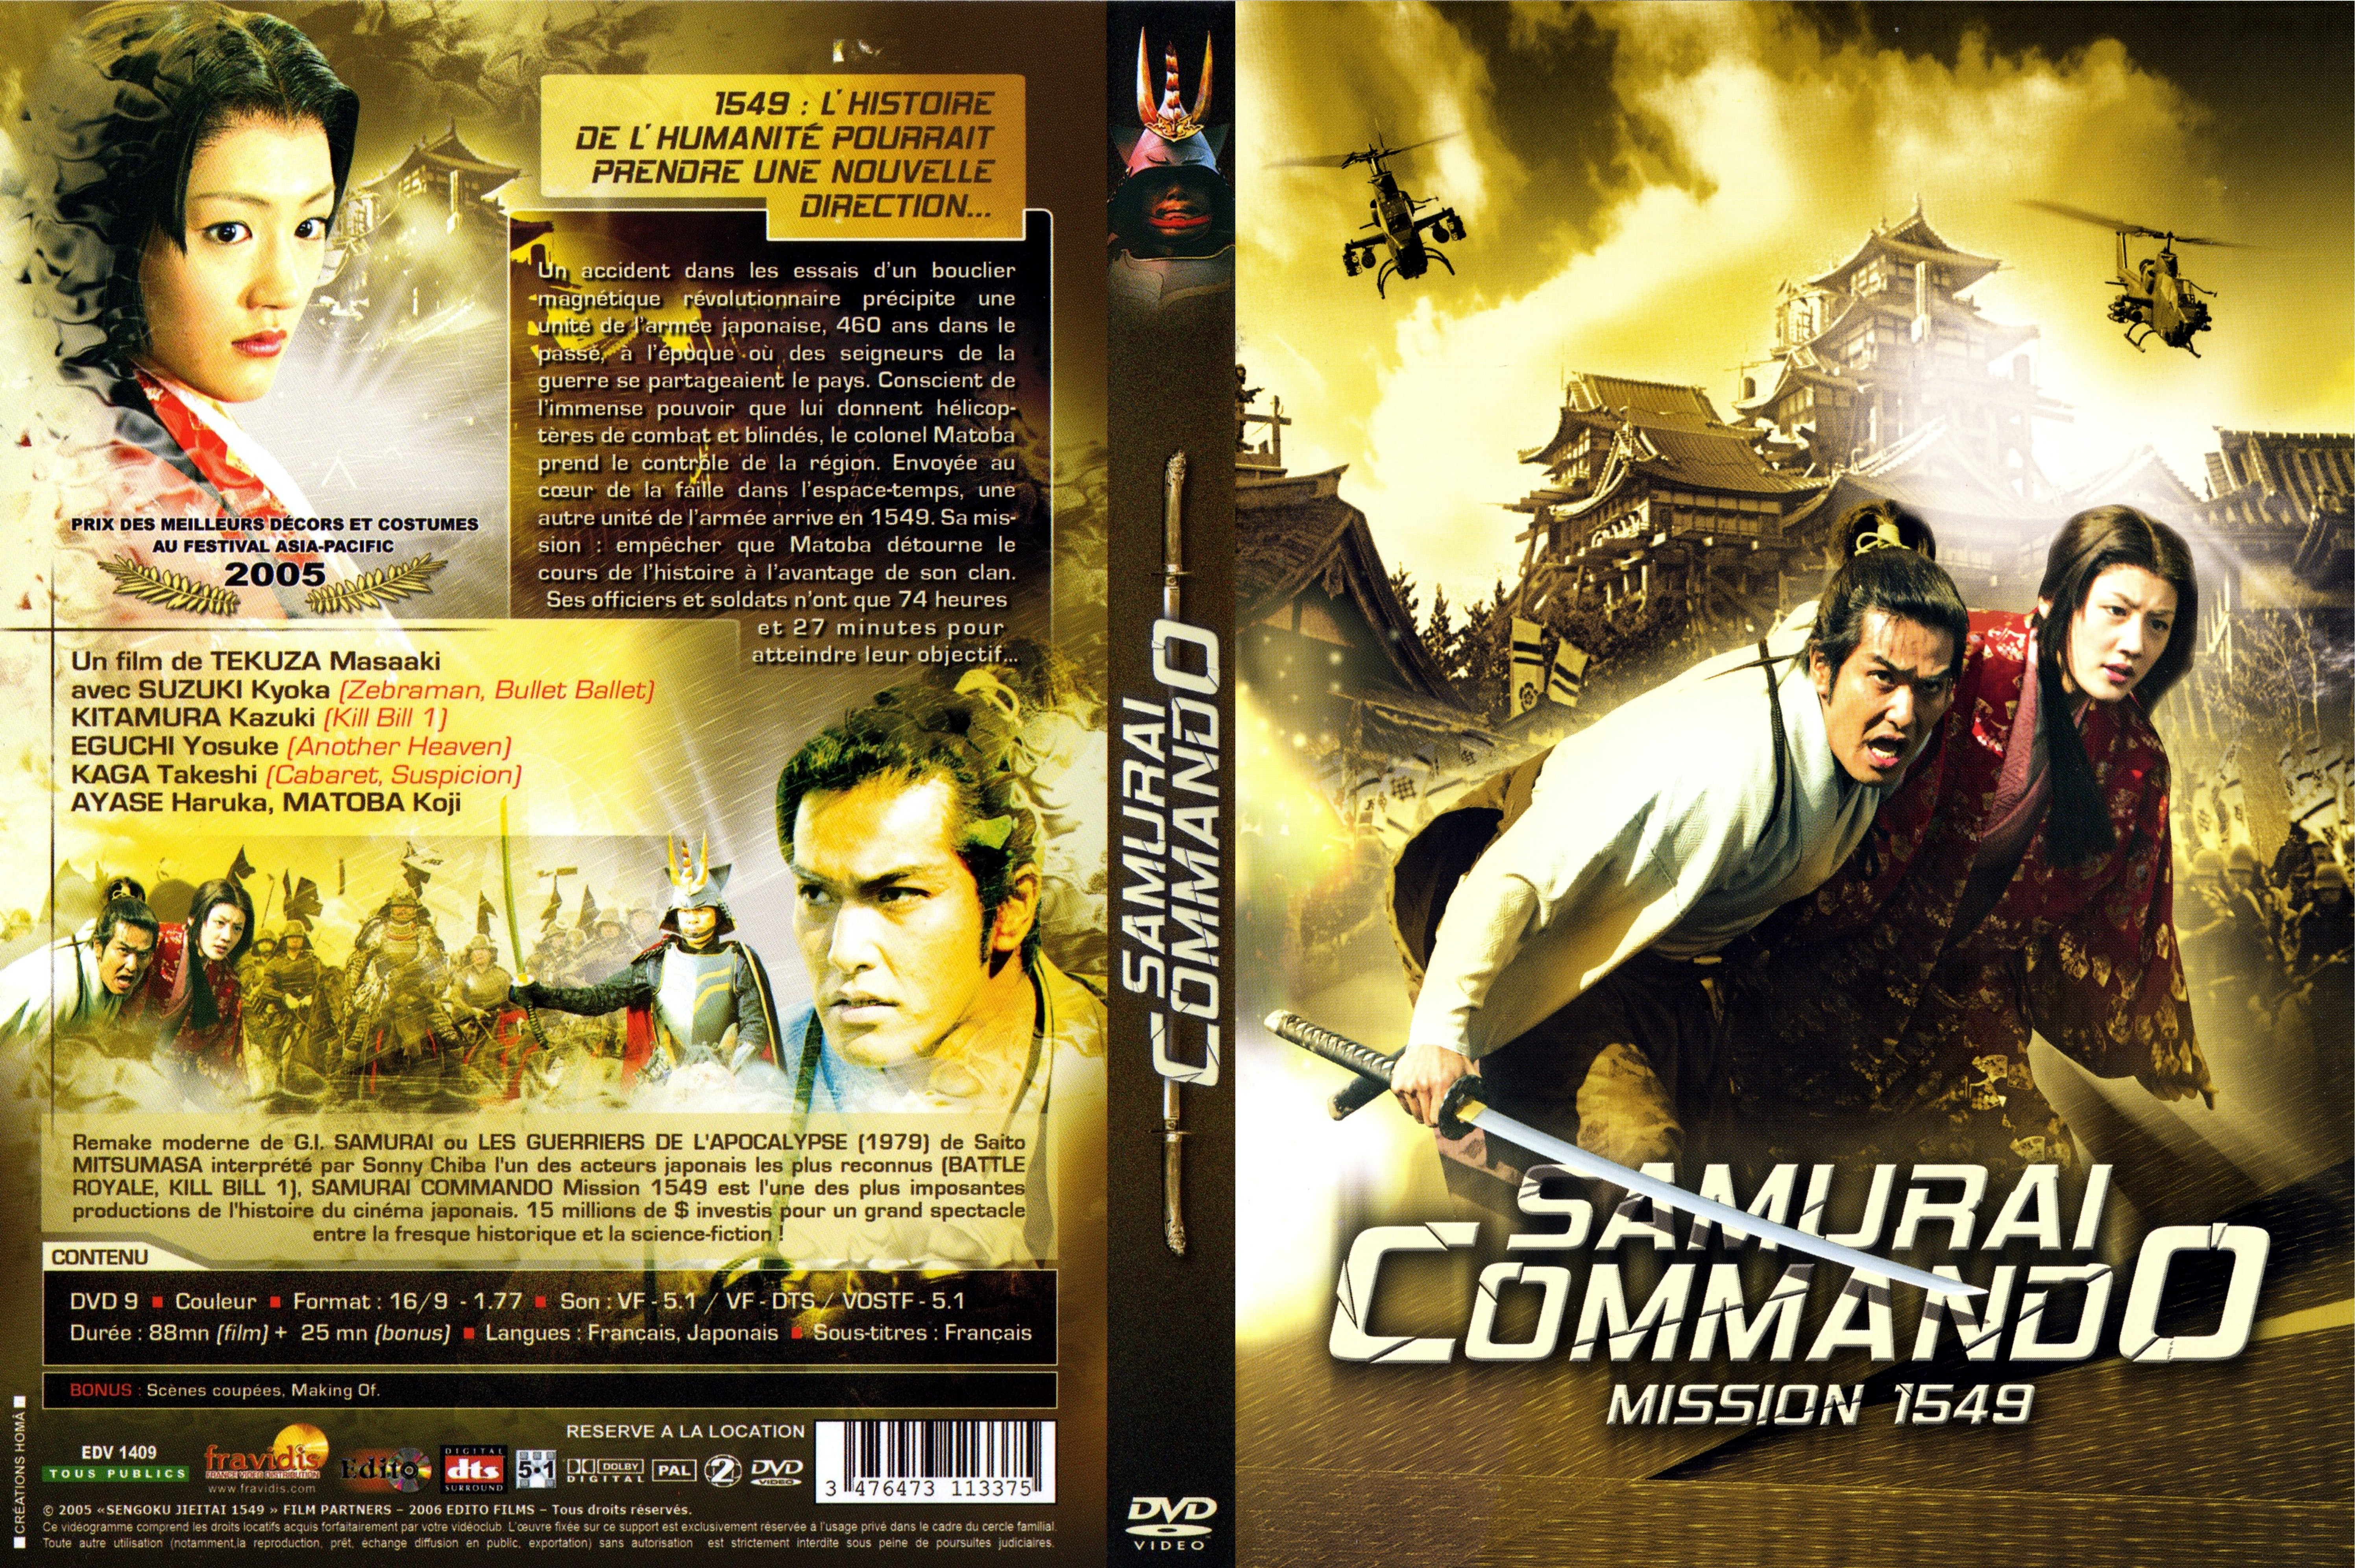 Jaquette DVD Samurai commando v6